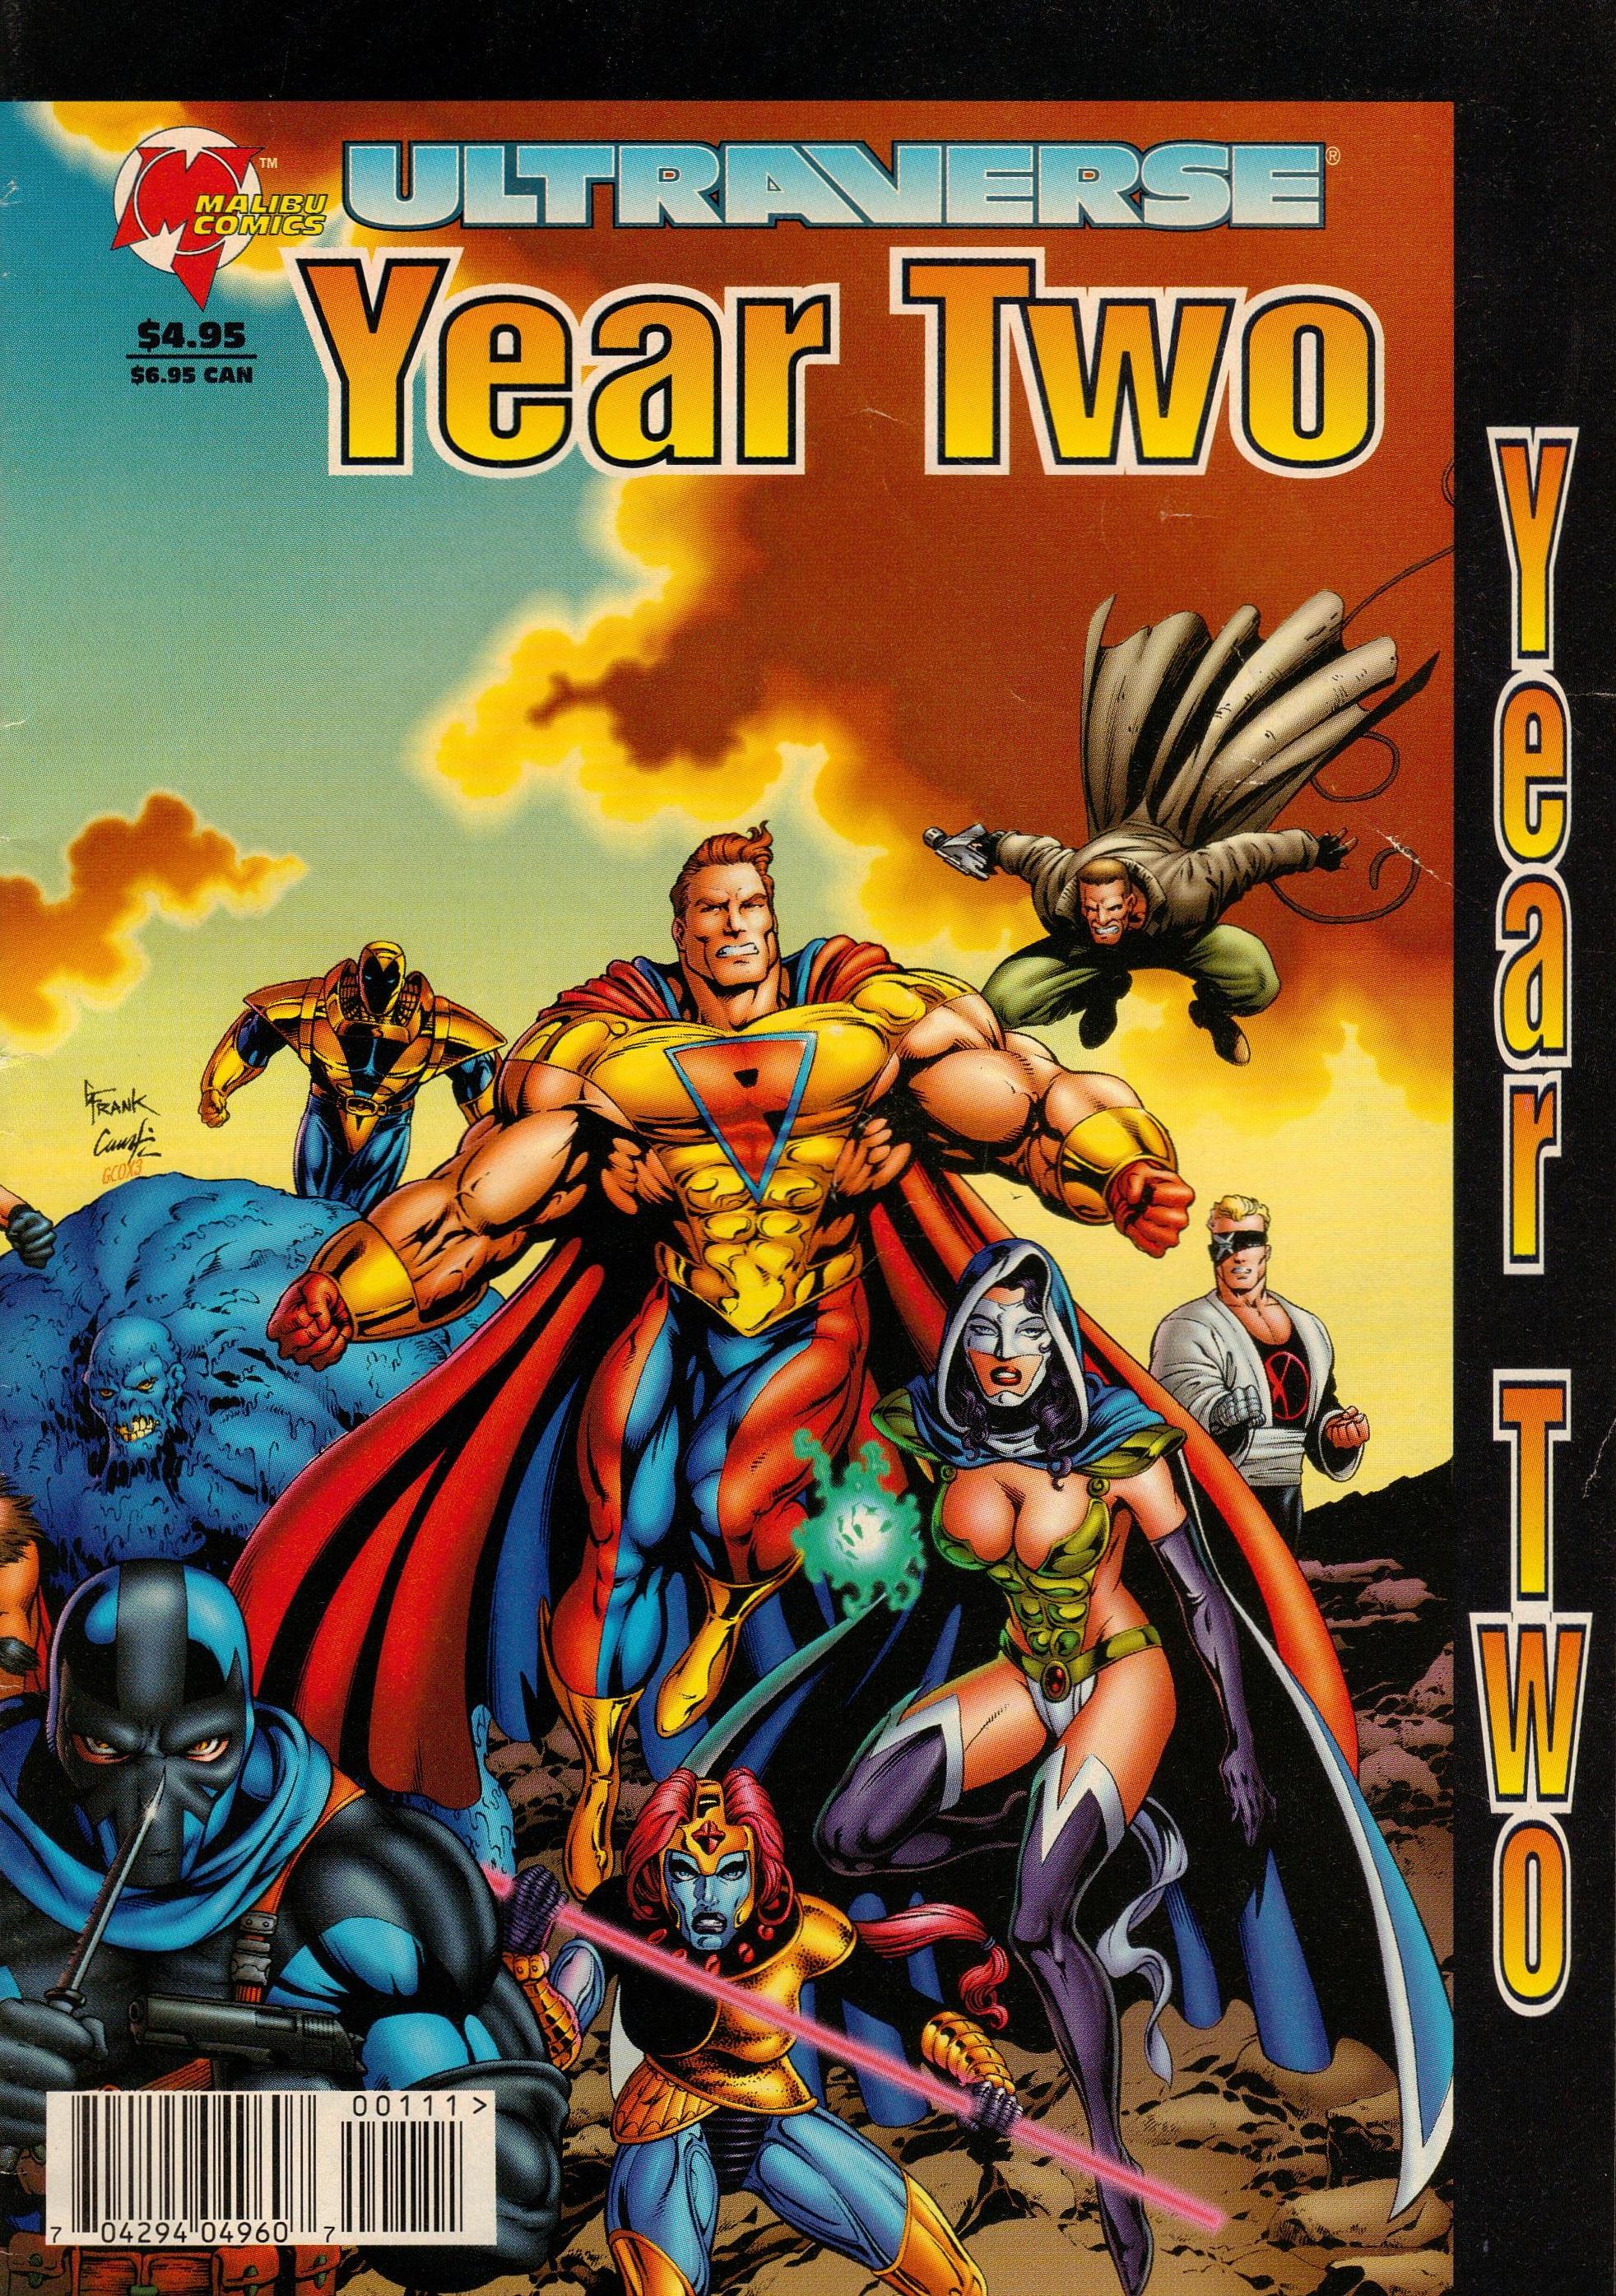 Ultraverse Year Two Vol. 1 #1